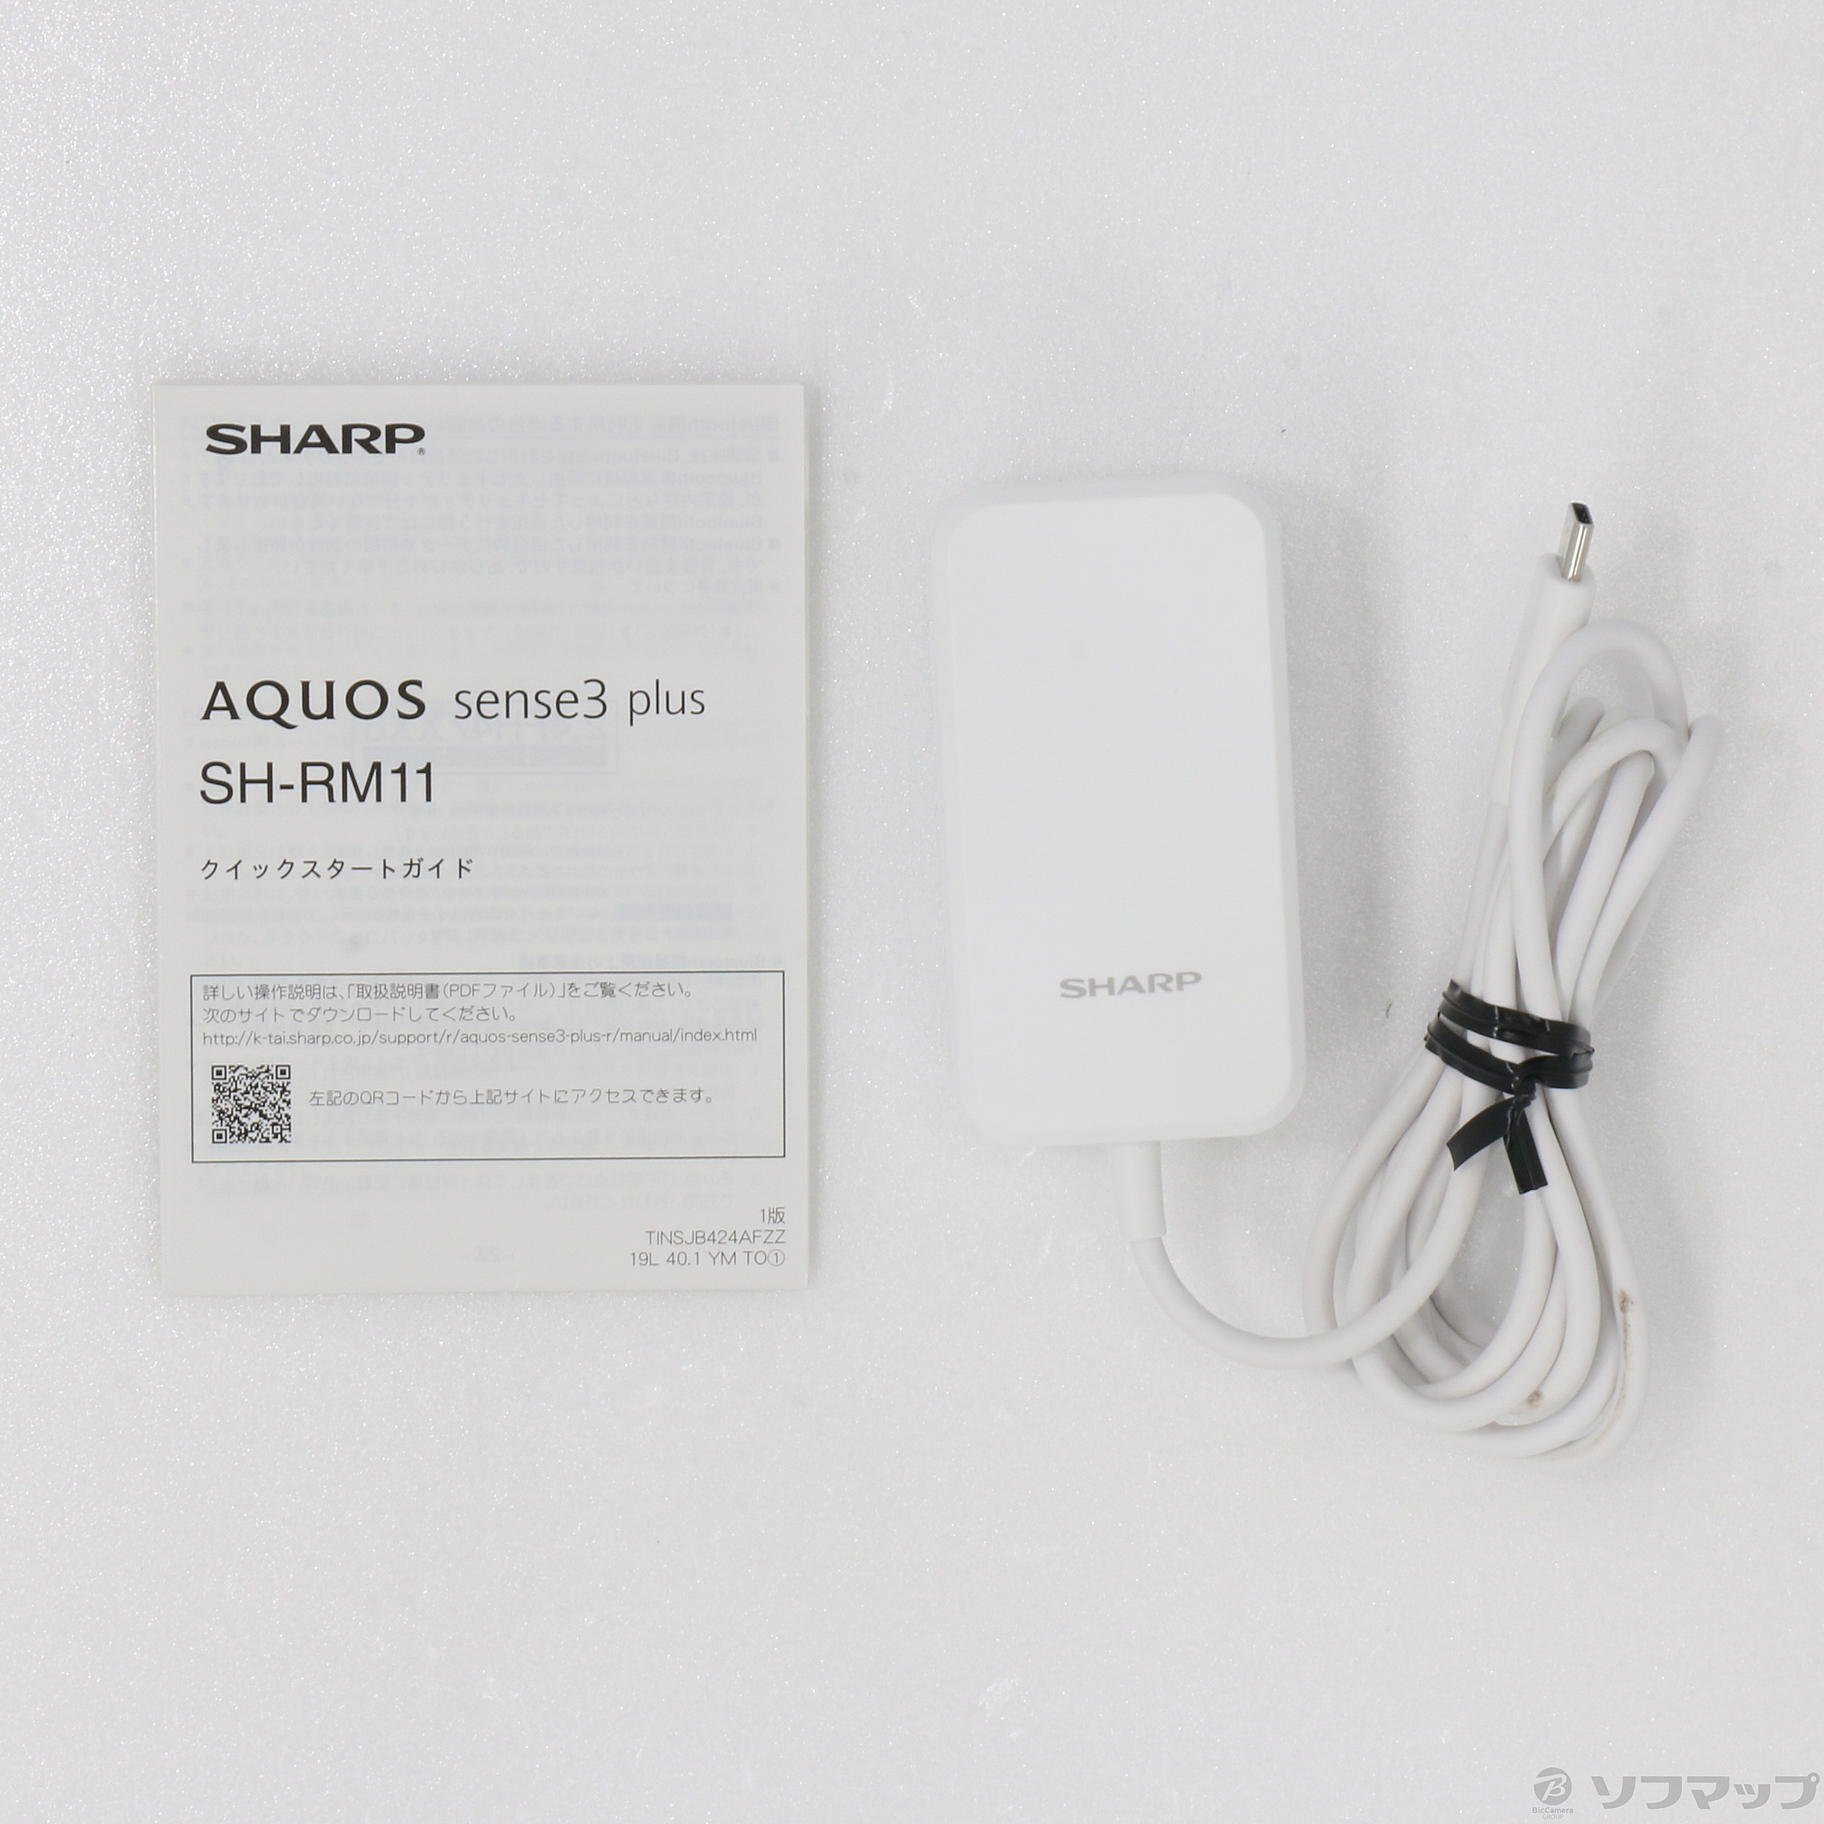 AQUOS sense3 plus SH-RM11 white 版